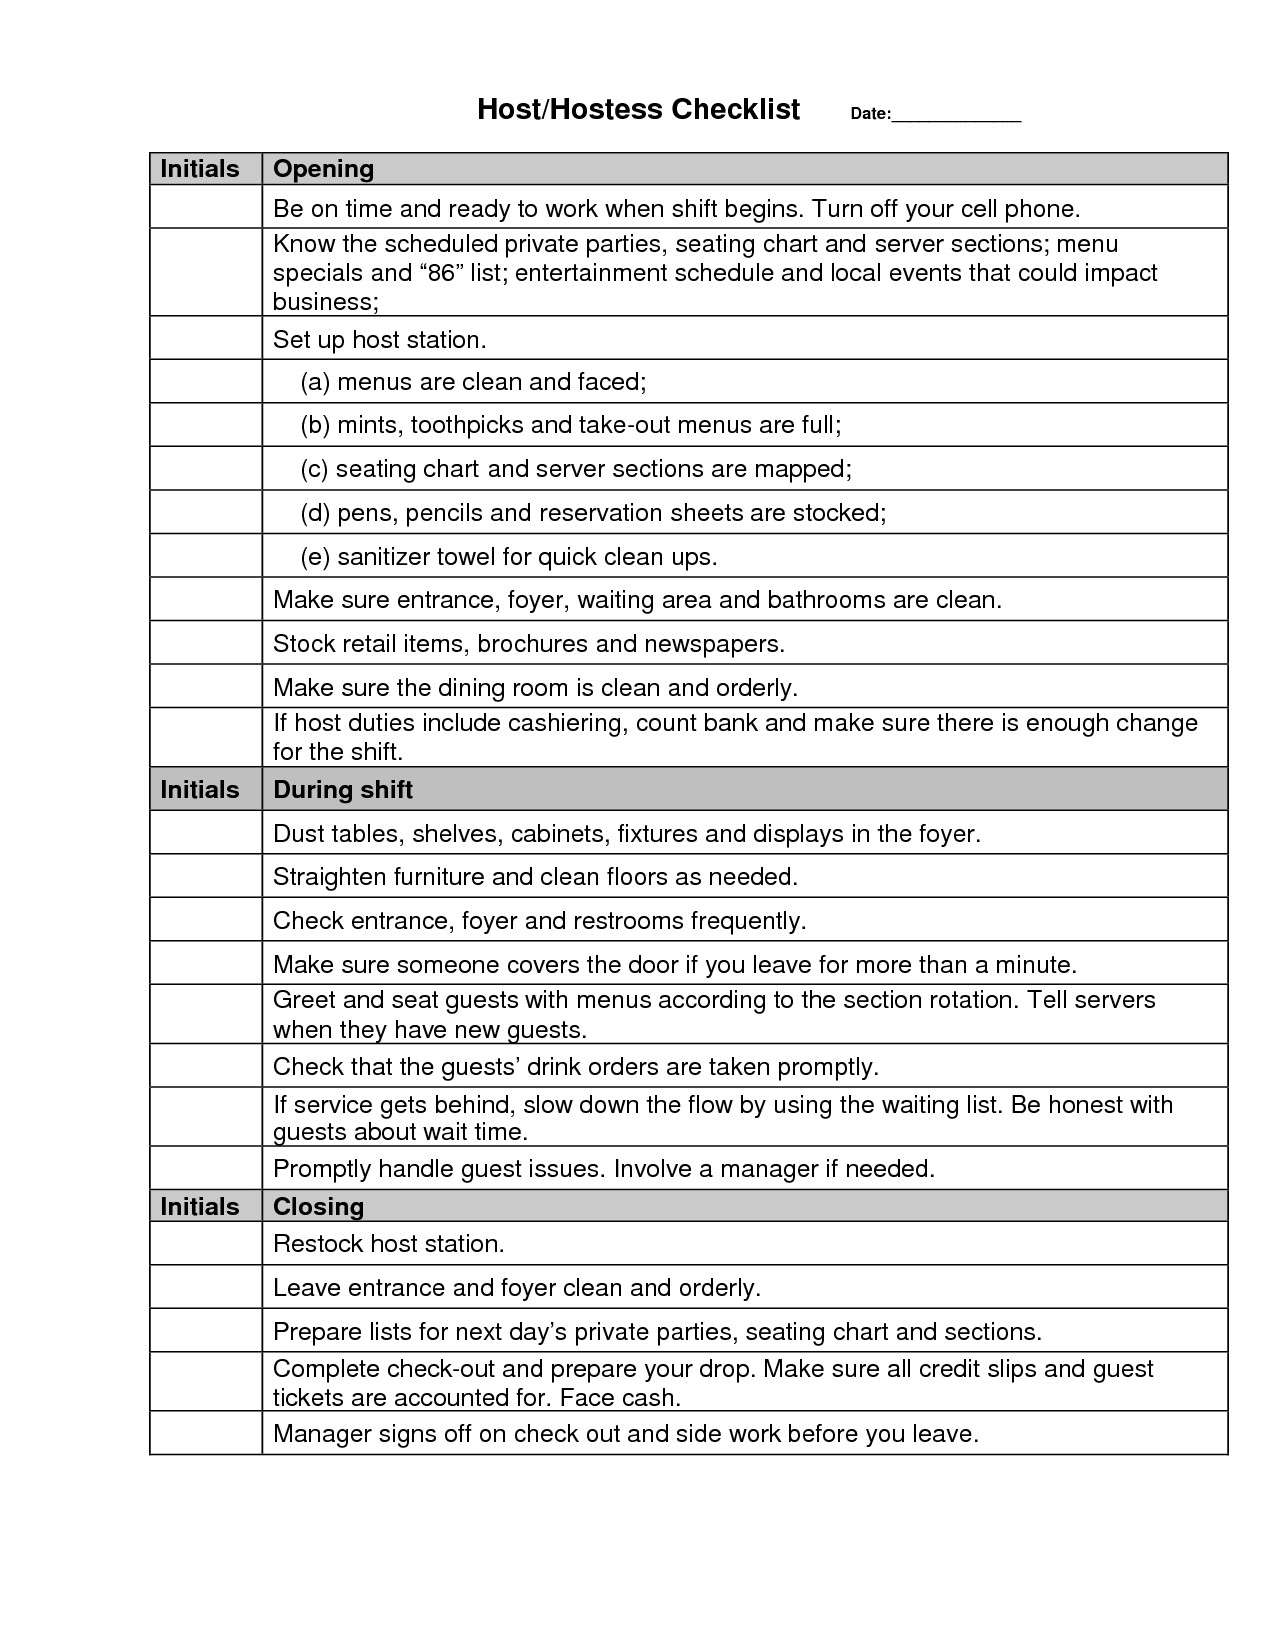 restaurant server side work checklist template Jennies